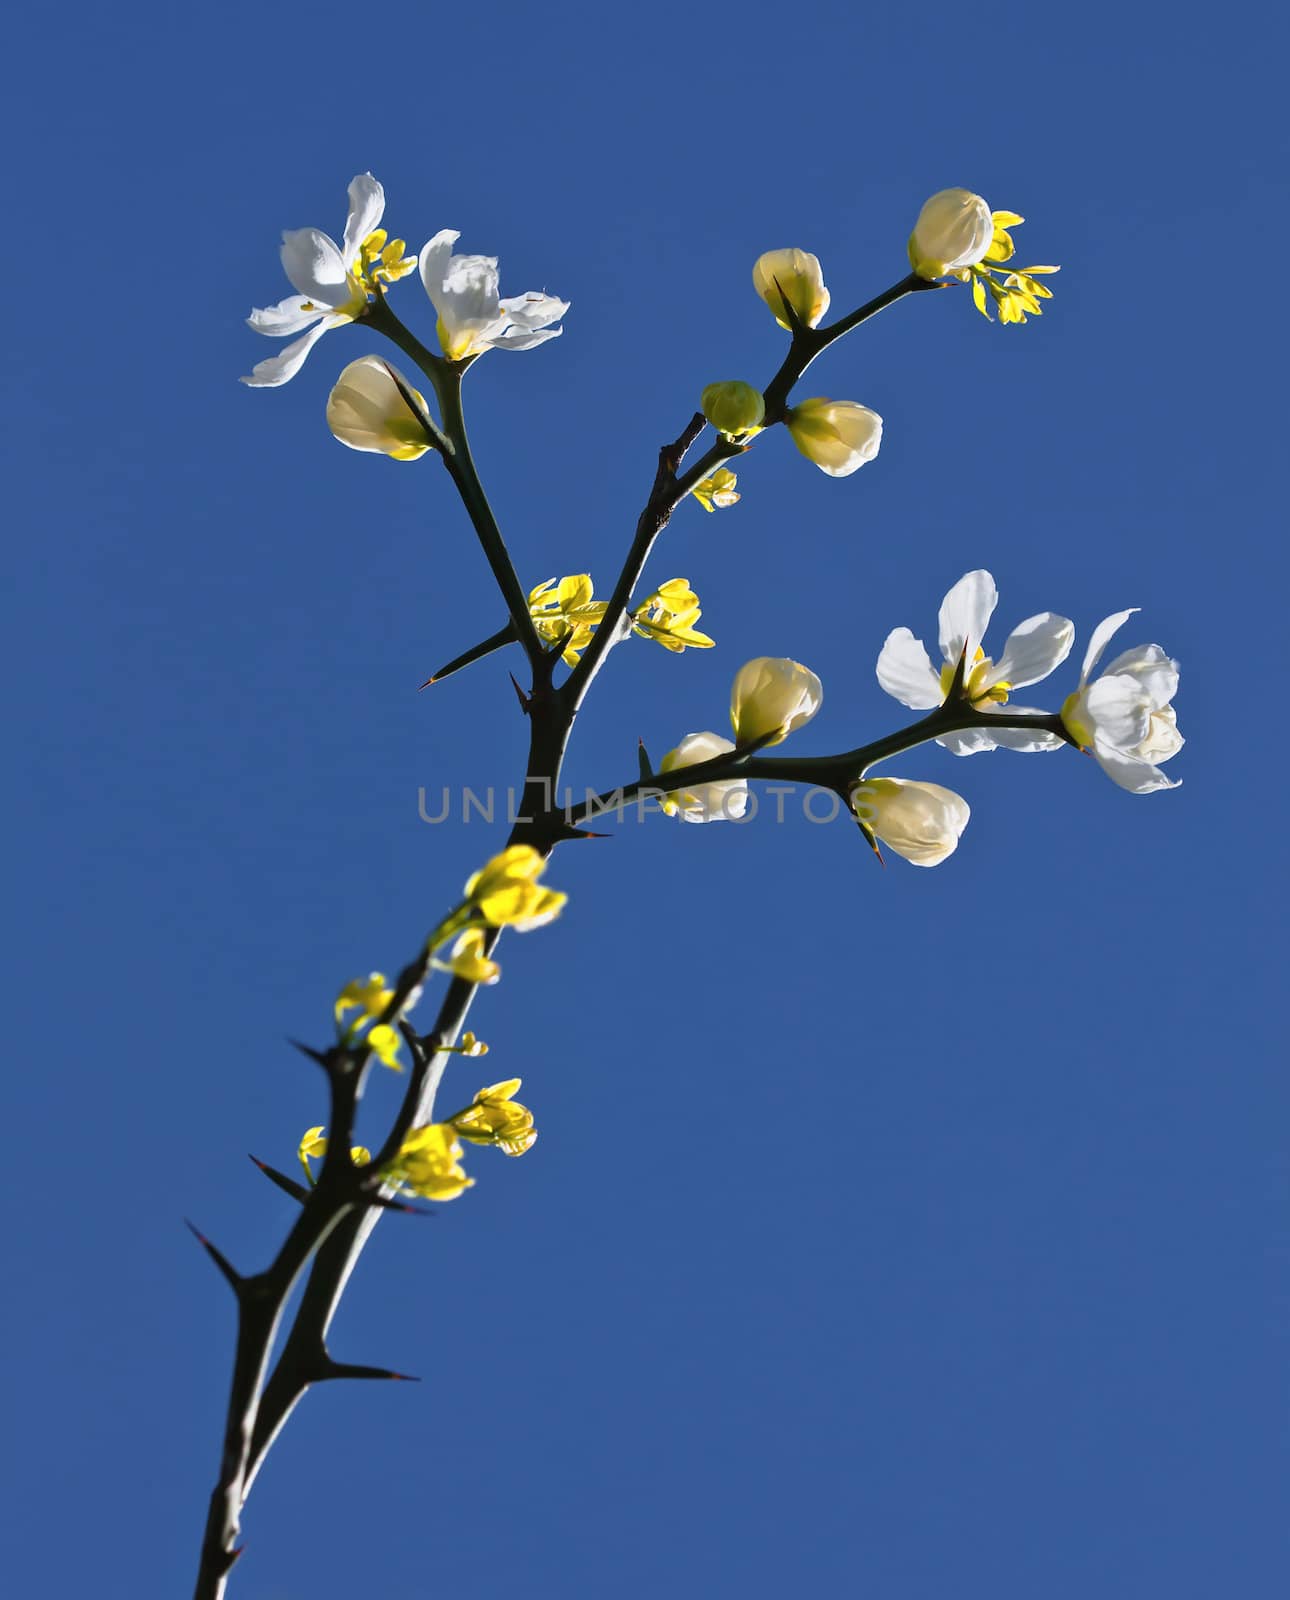 Poncirus Trifoliata. White flowers and blue sky